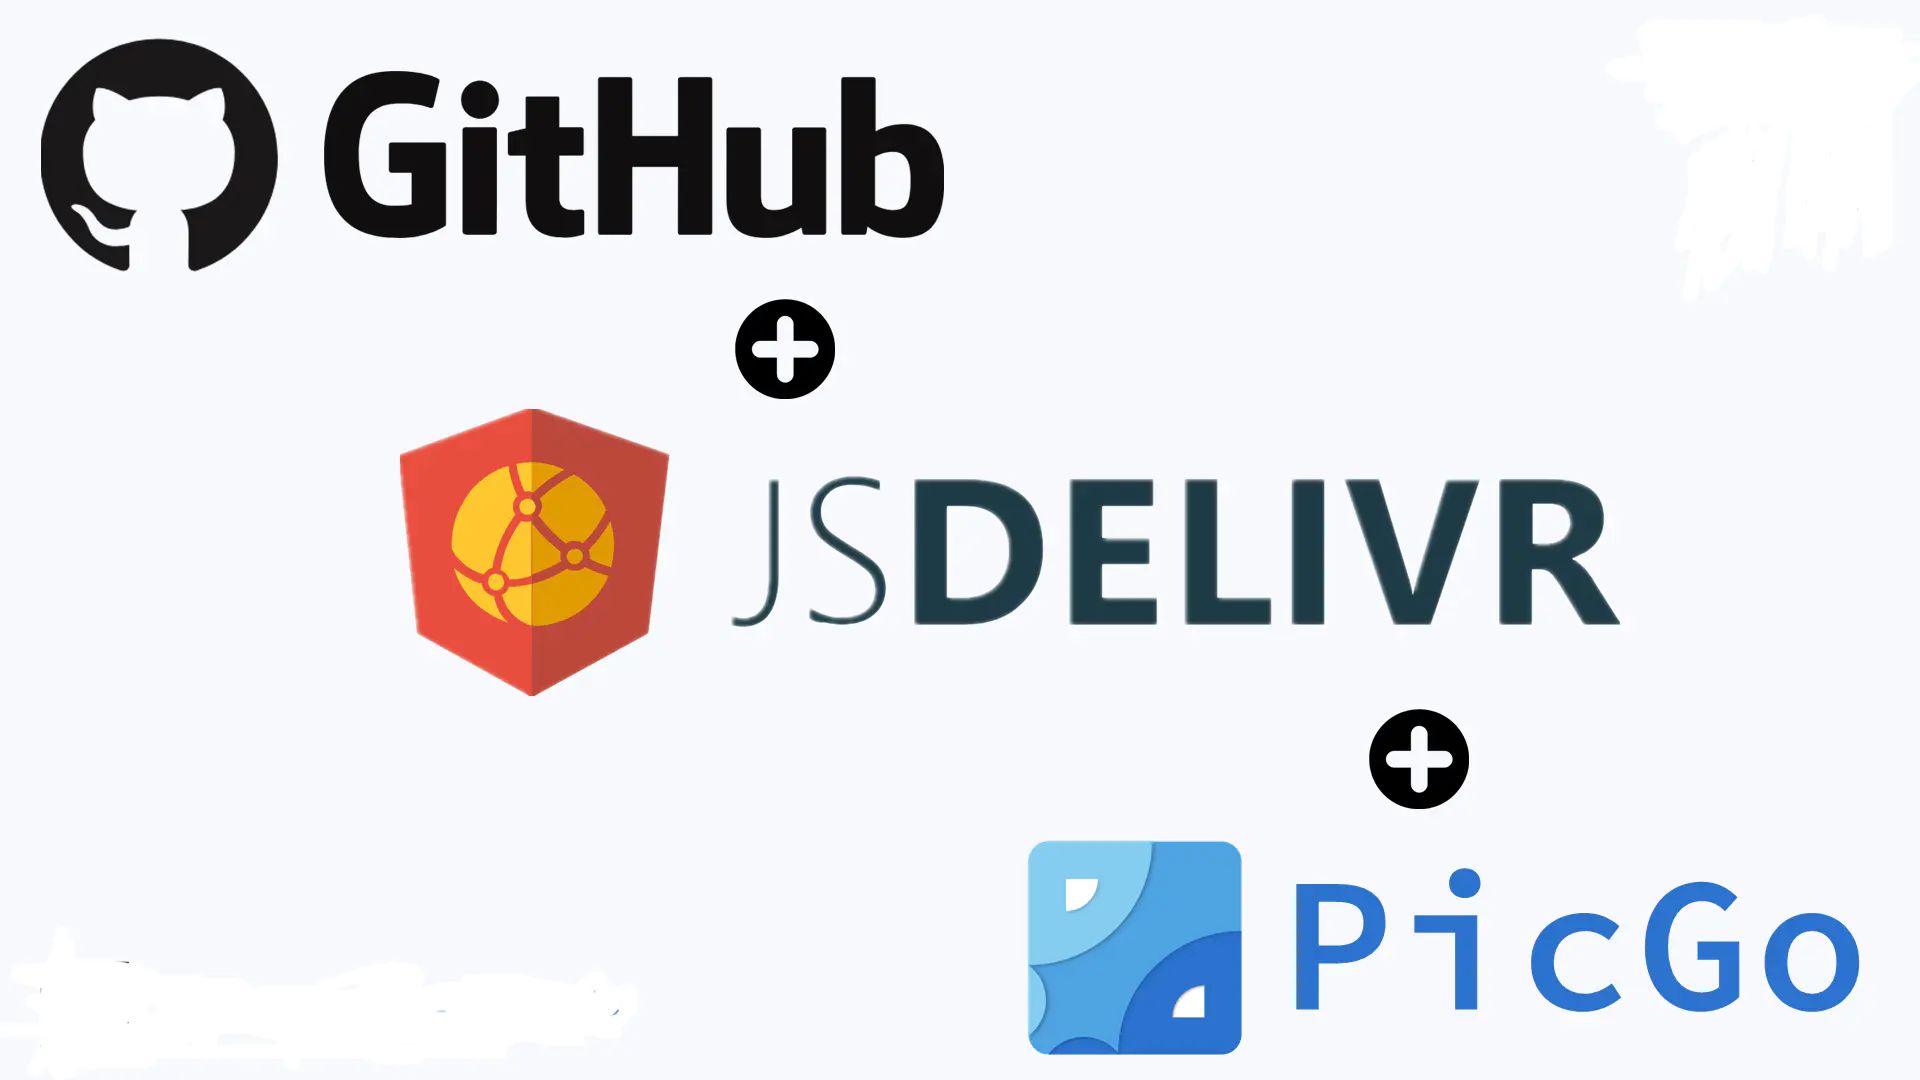 【图床】利用GitHub+jsdelivr搭建一个图床